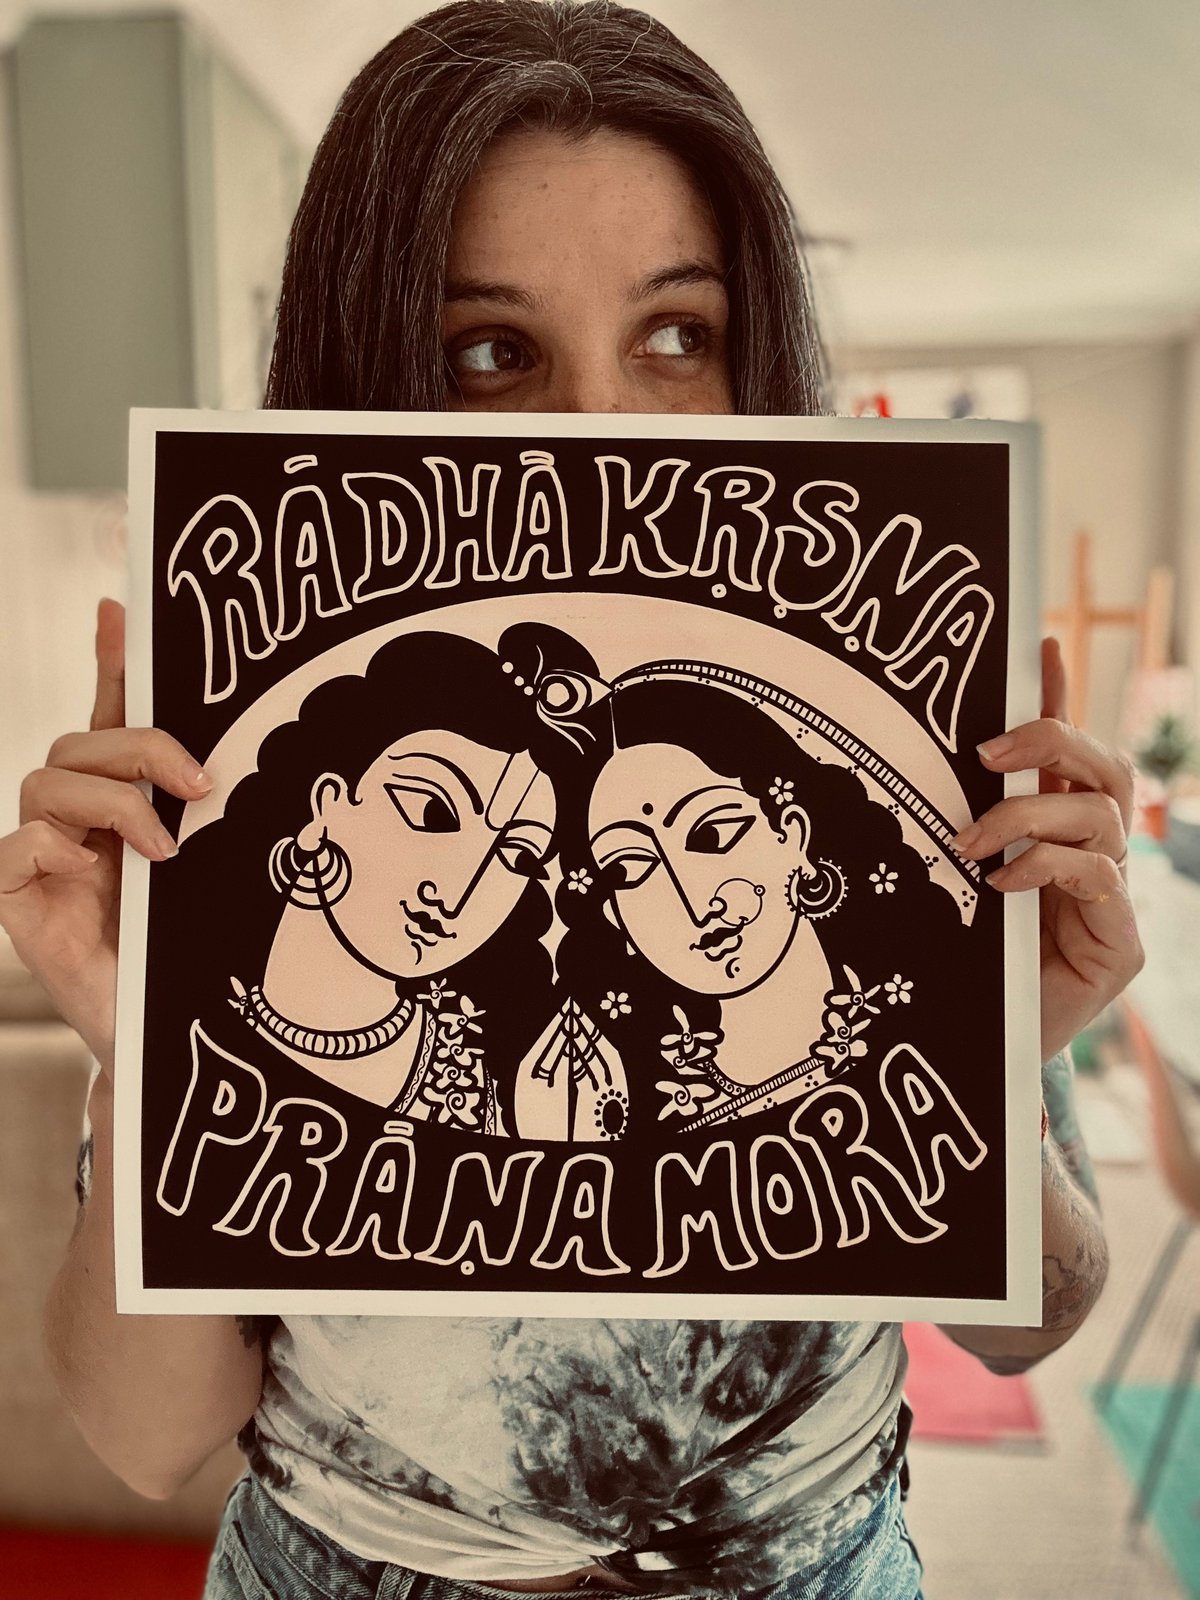 Radha Krsna Prana Mora